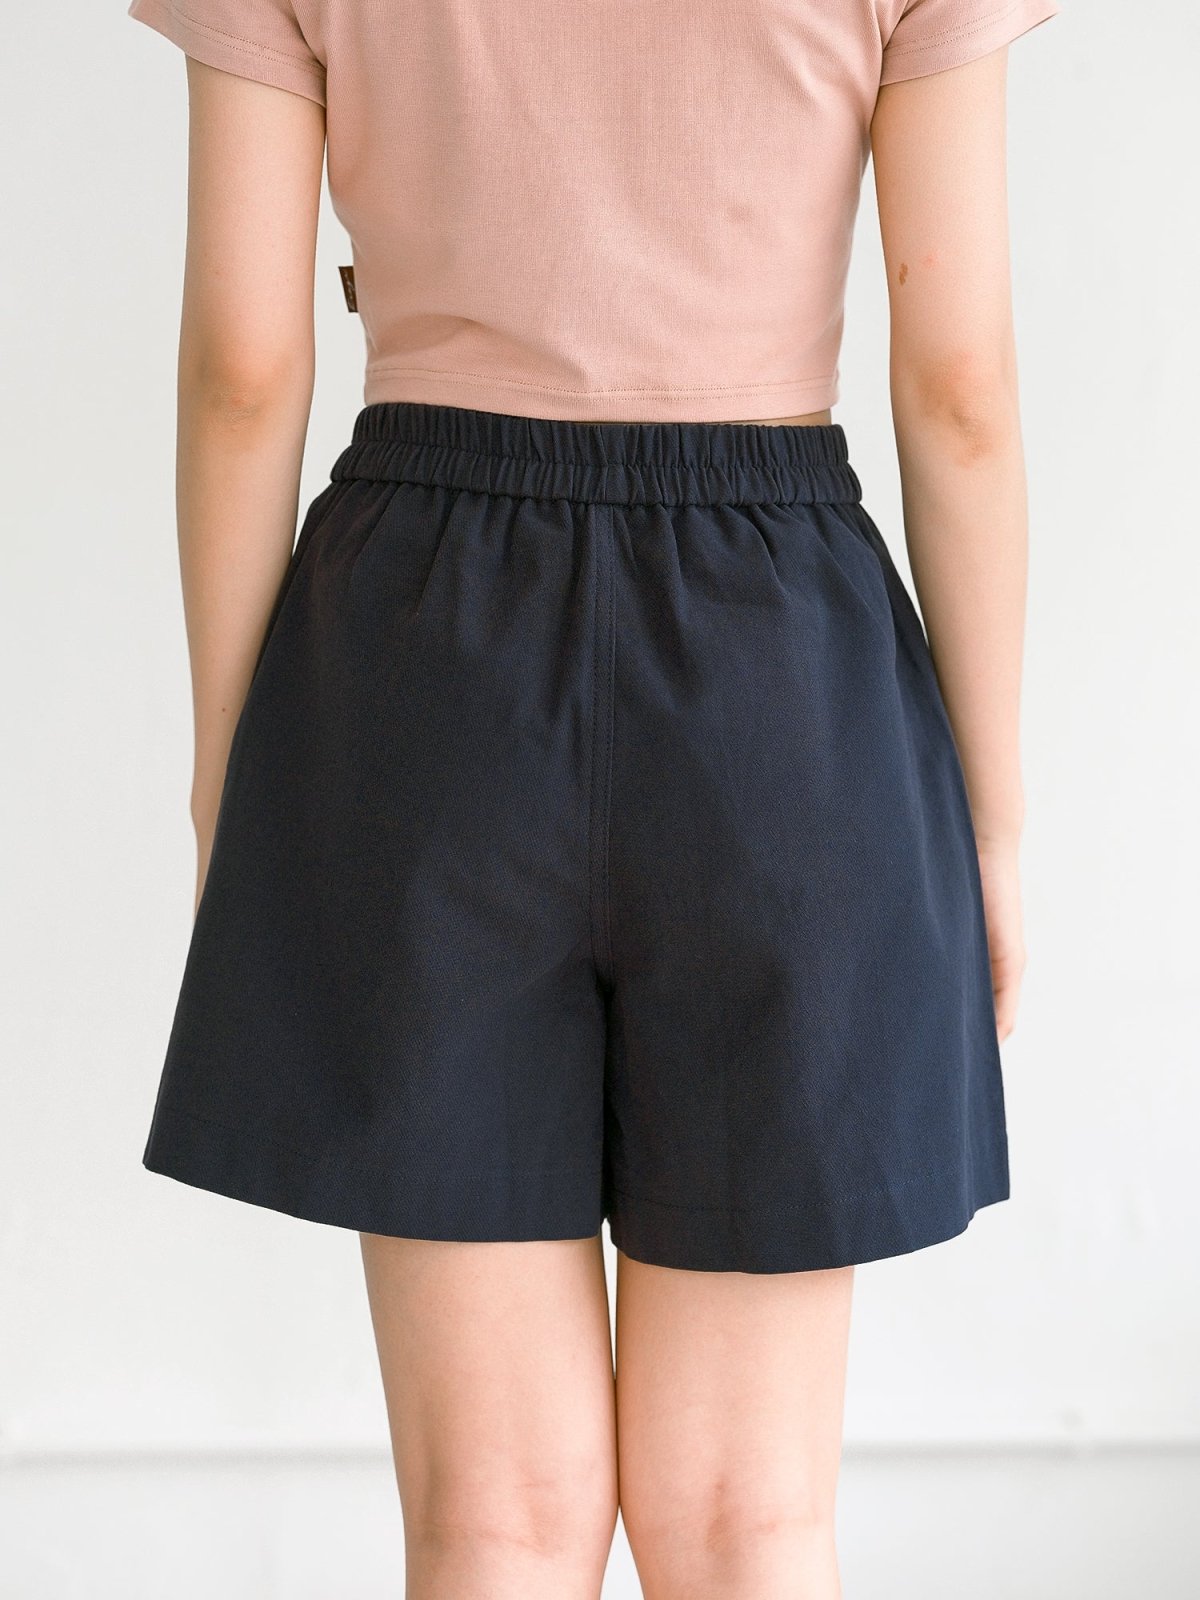 Hannah Elastic Cotton Shorts - DAG-G-220174BlueF - Navy Blue - F - D'ZAGE Designs